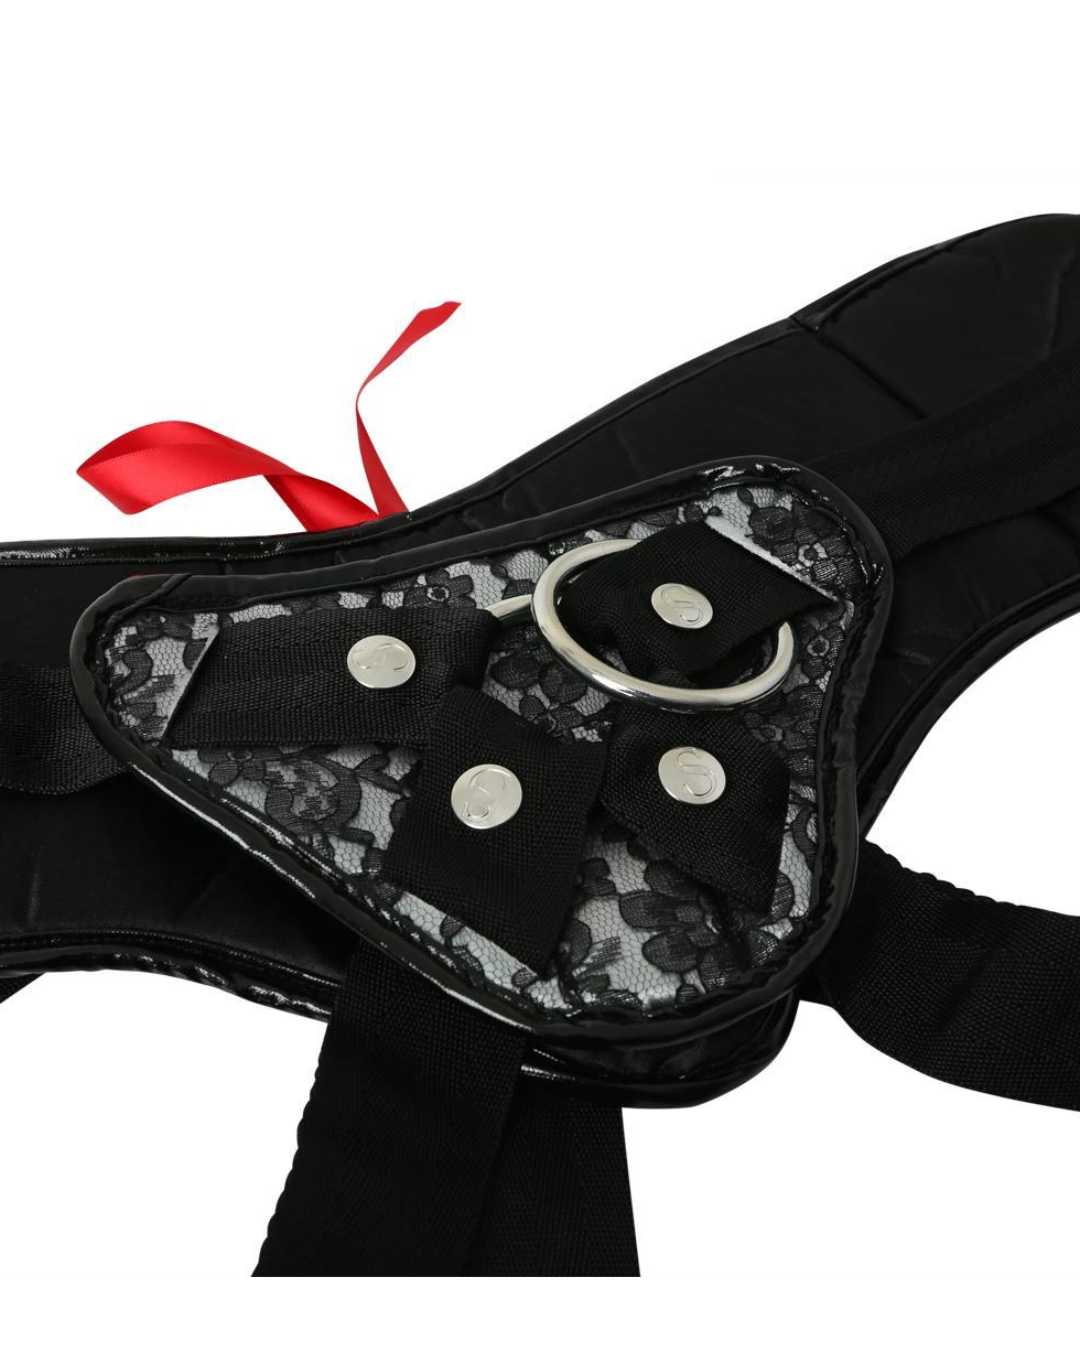 Plus Size Lace Satin Corsette Strap On - Grey/Black by Sportsheets